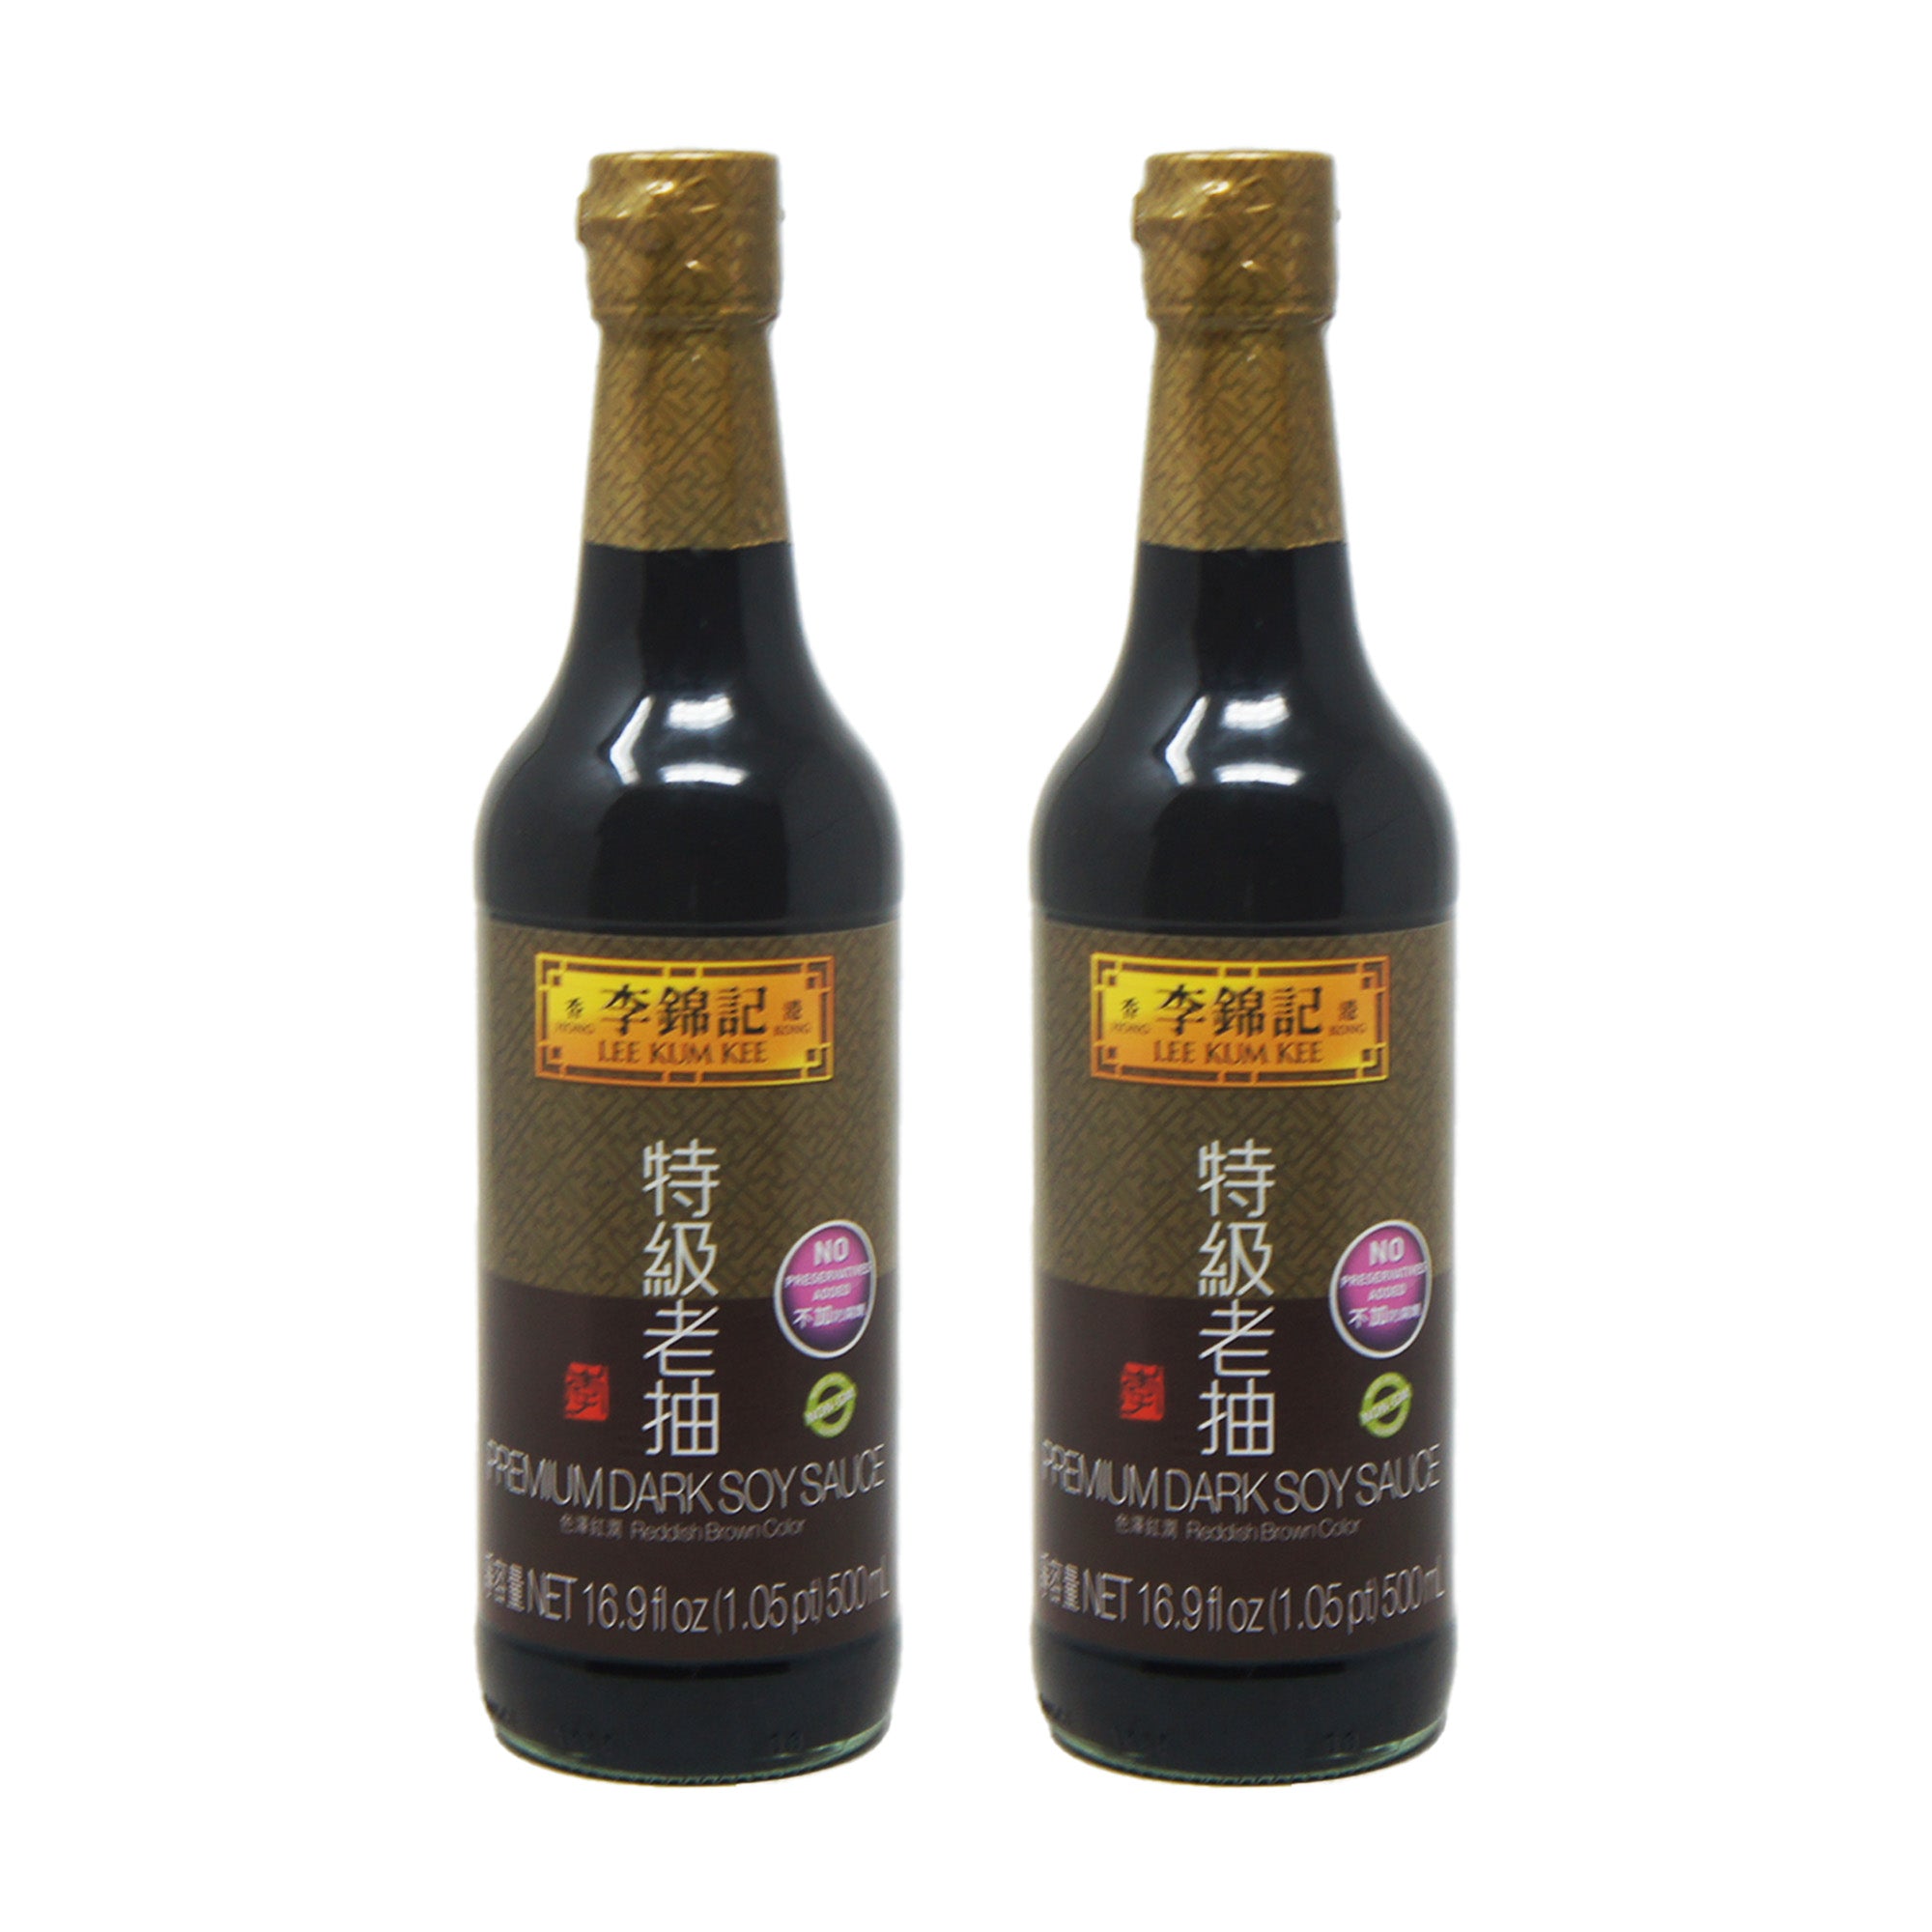 Lee Kum Kee Premium Dark Soy Sauce, 16.9 fl oz Bottle, Product of China (2 Pack)